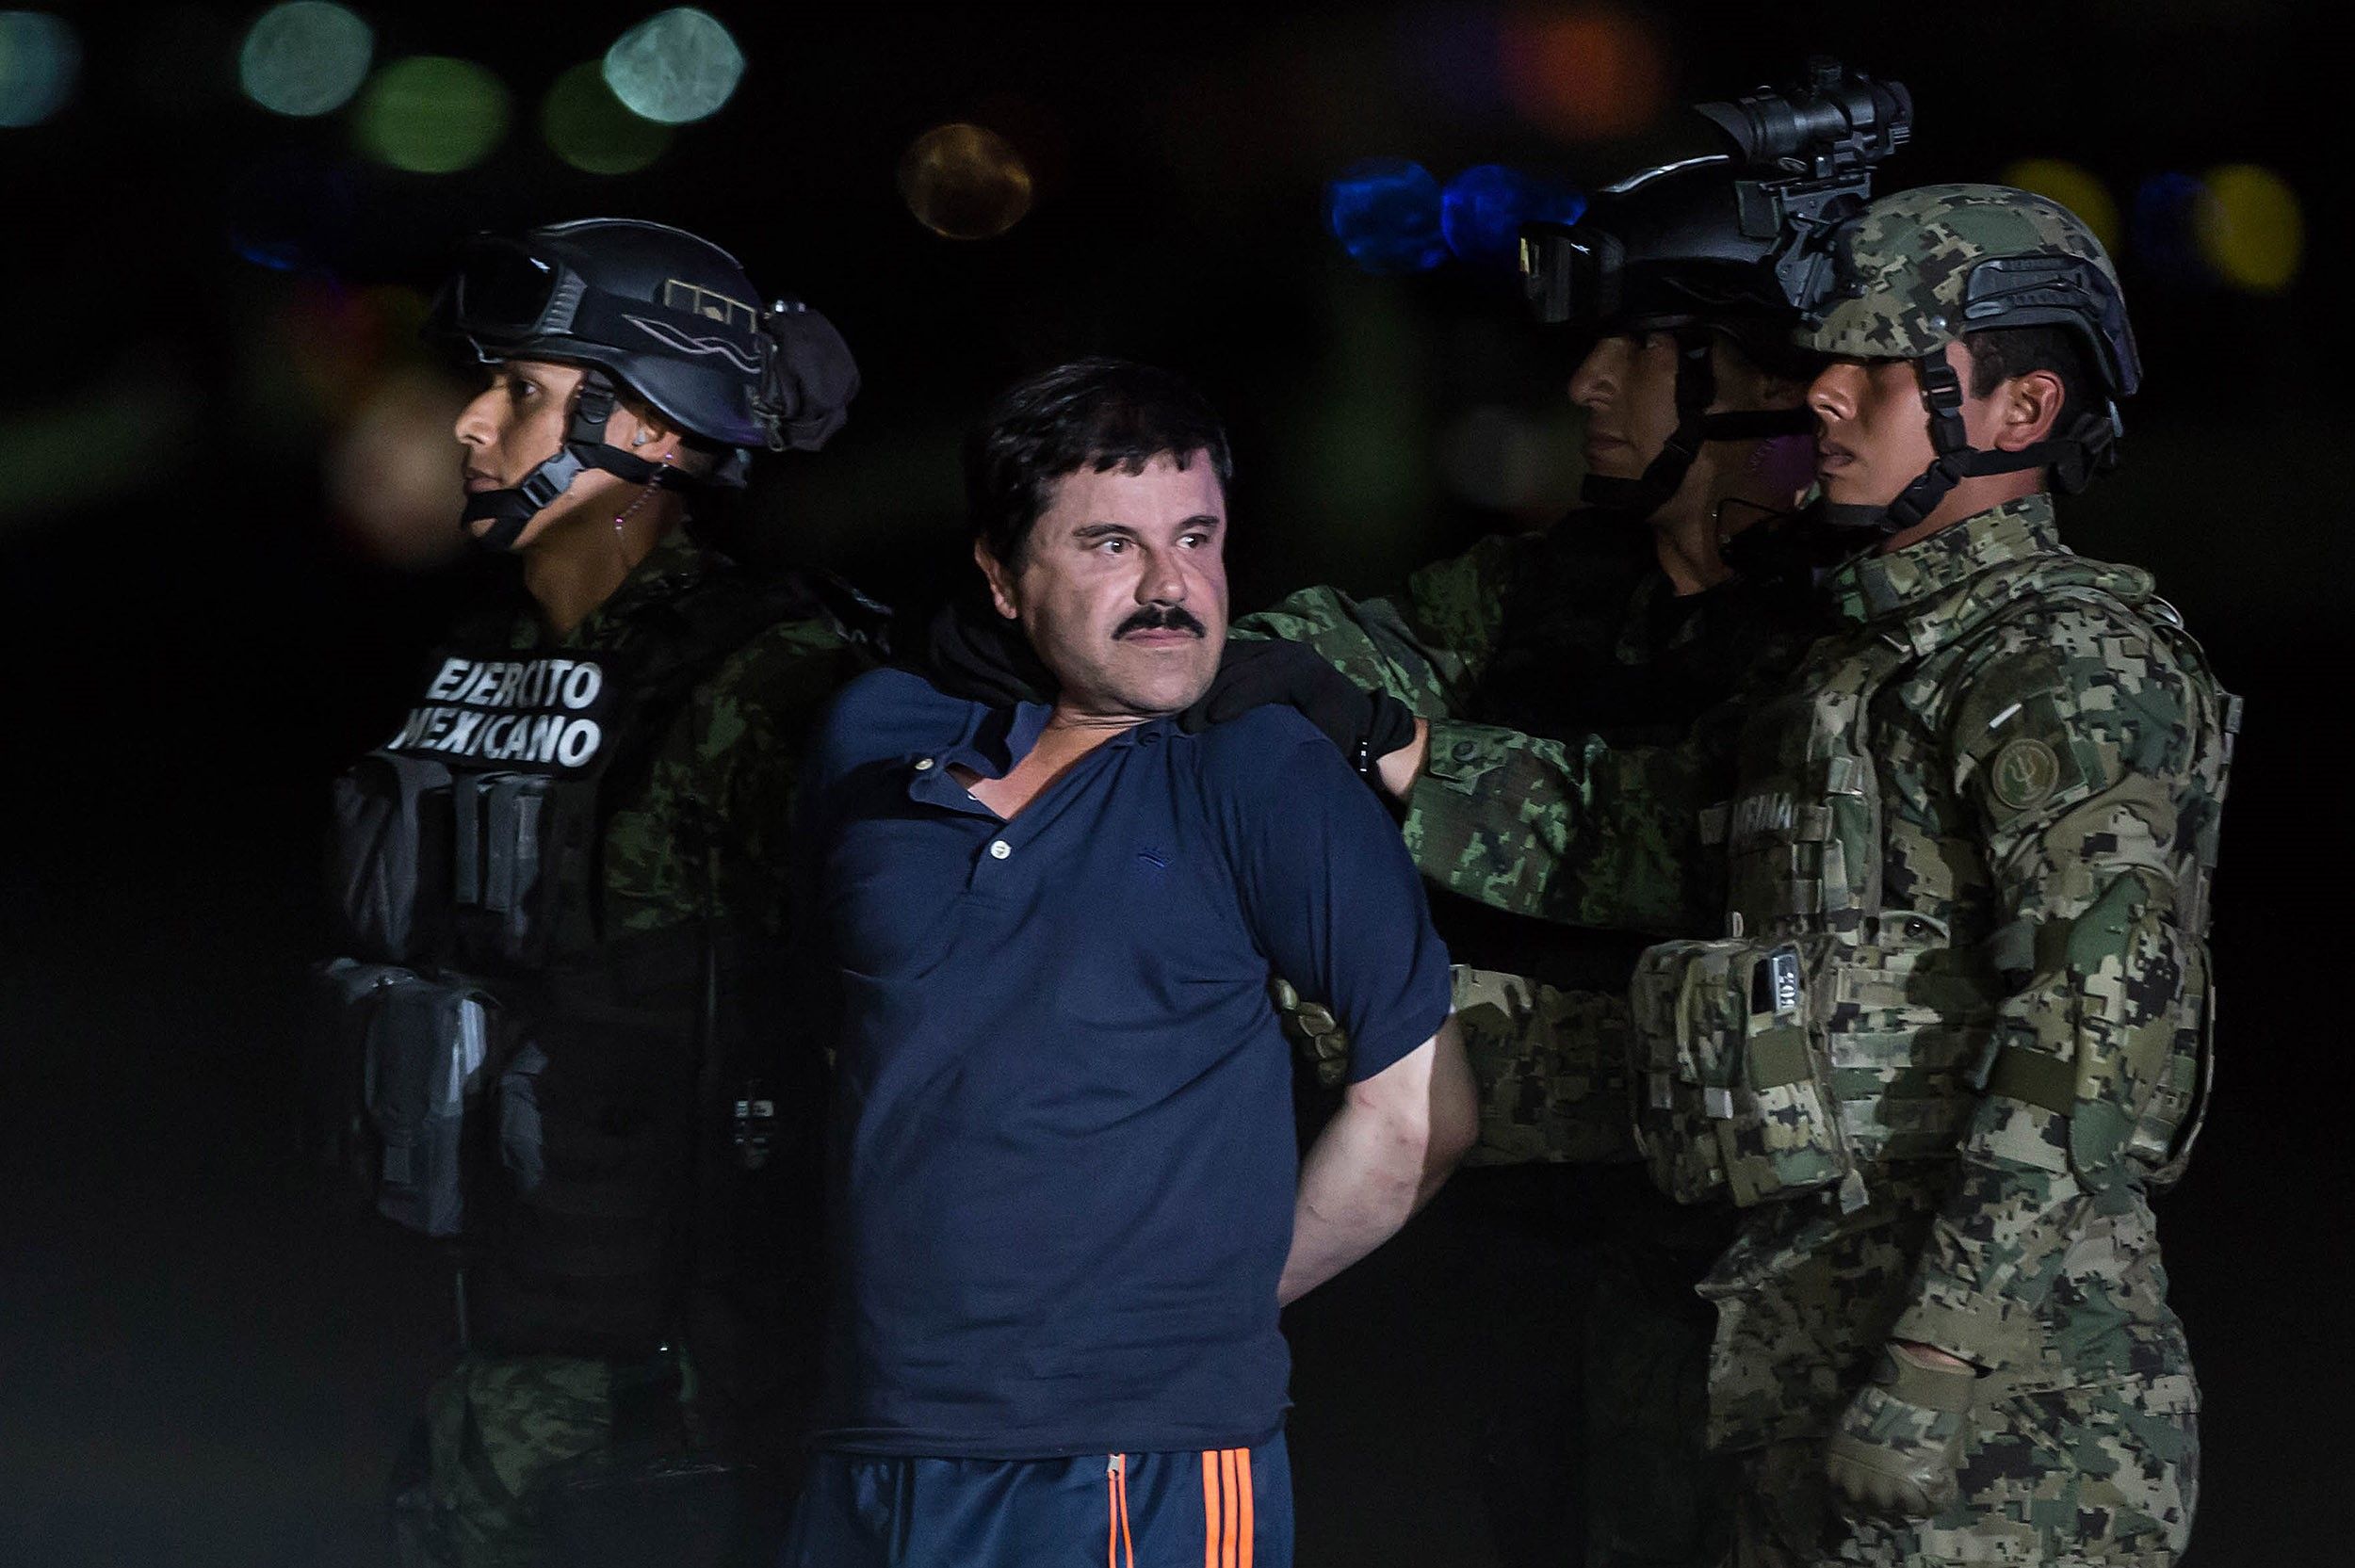 Joaquin Guzman Loera, also known as "El Chapo" is transported to Maximum Security Prison in 2016